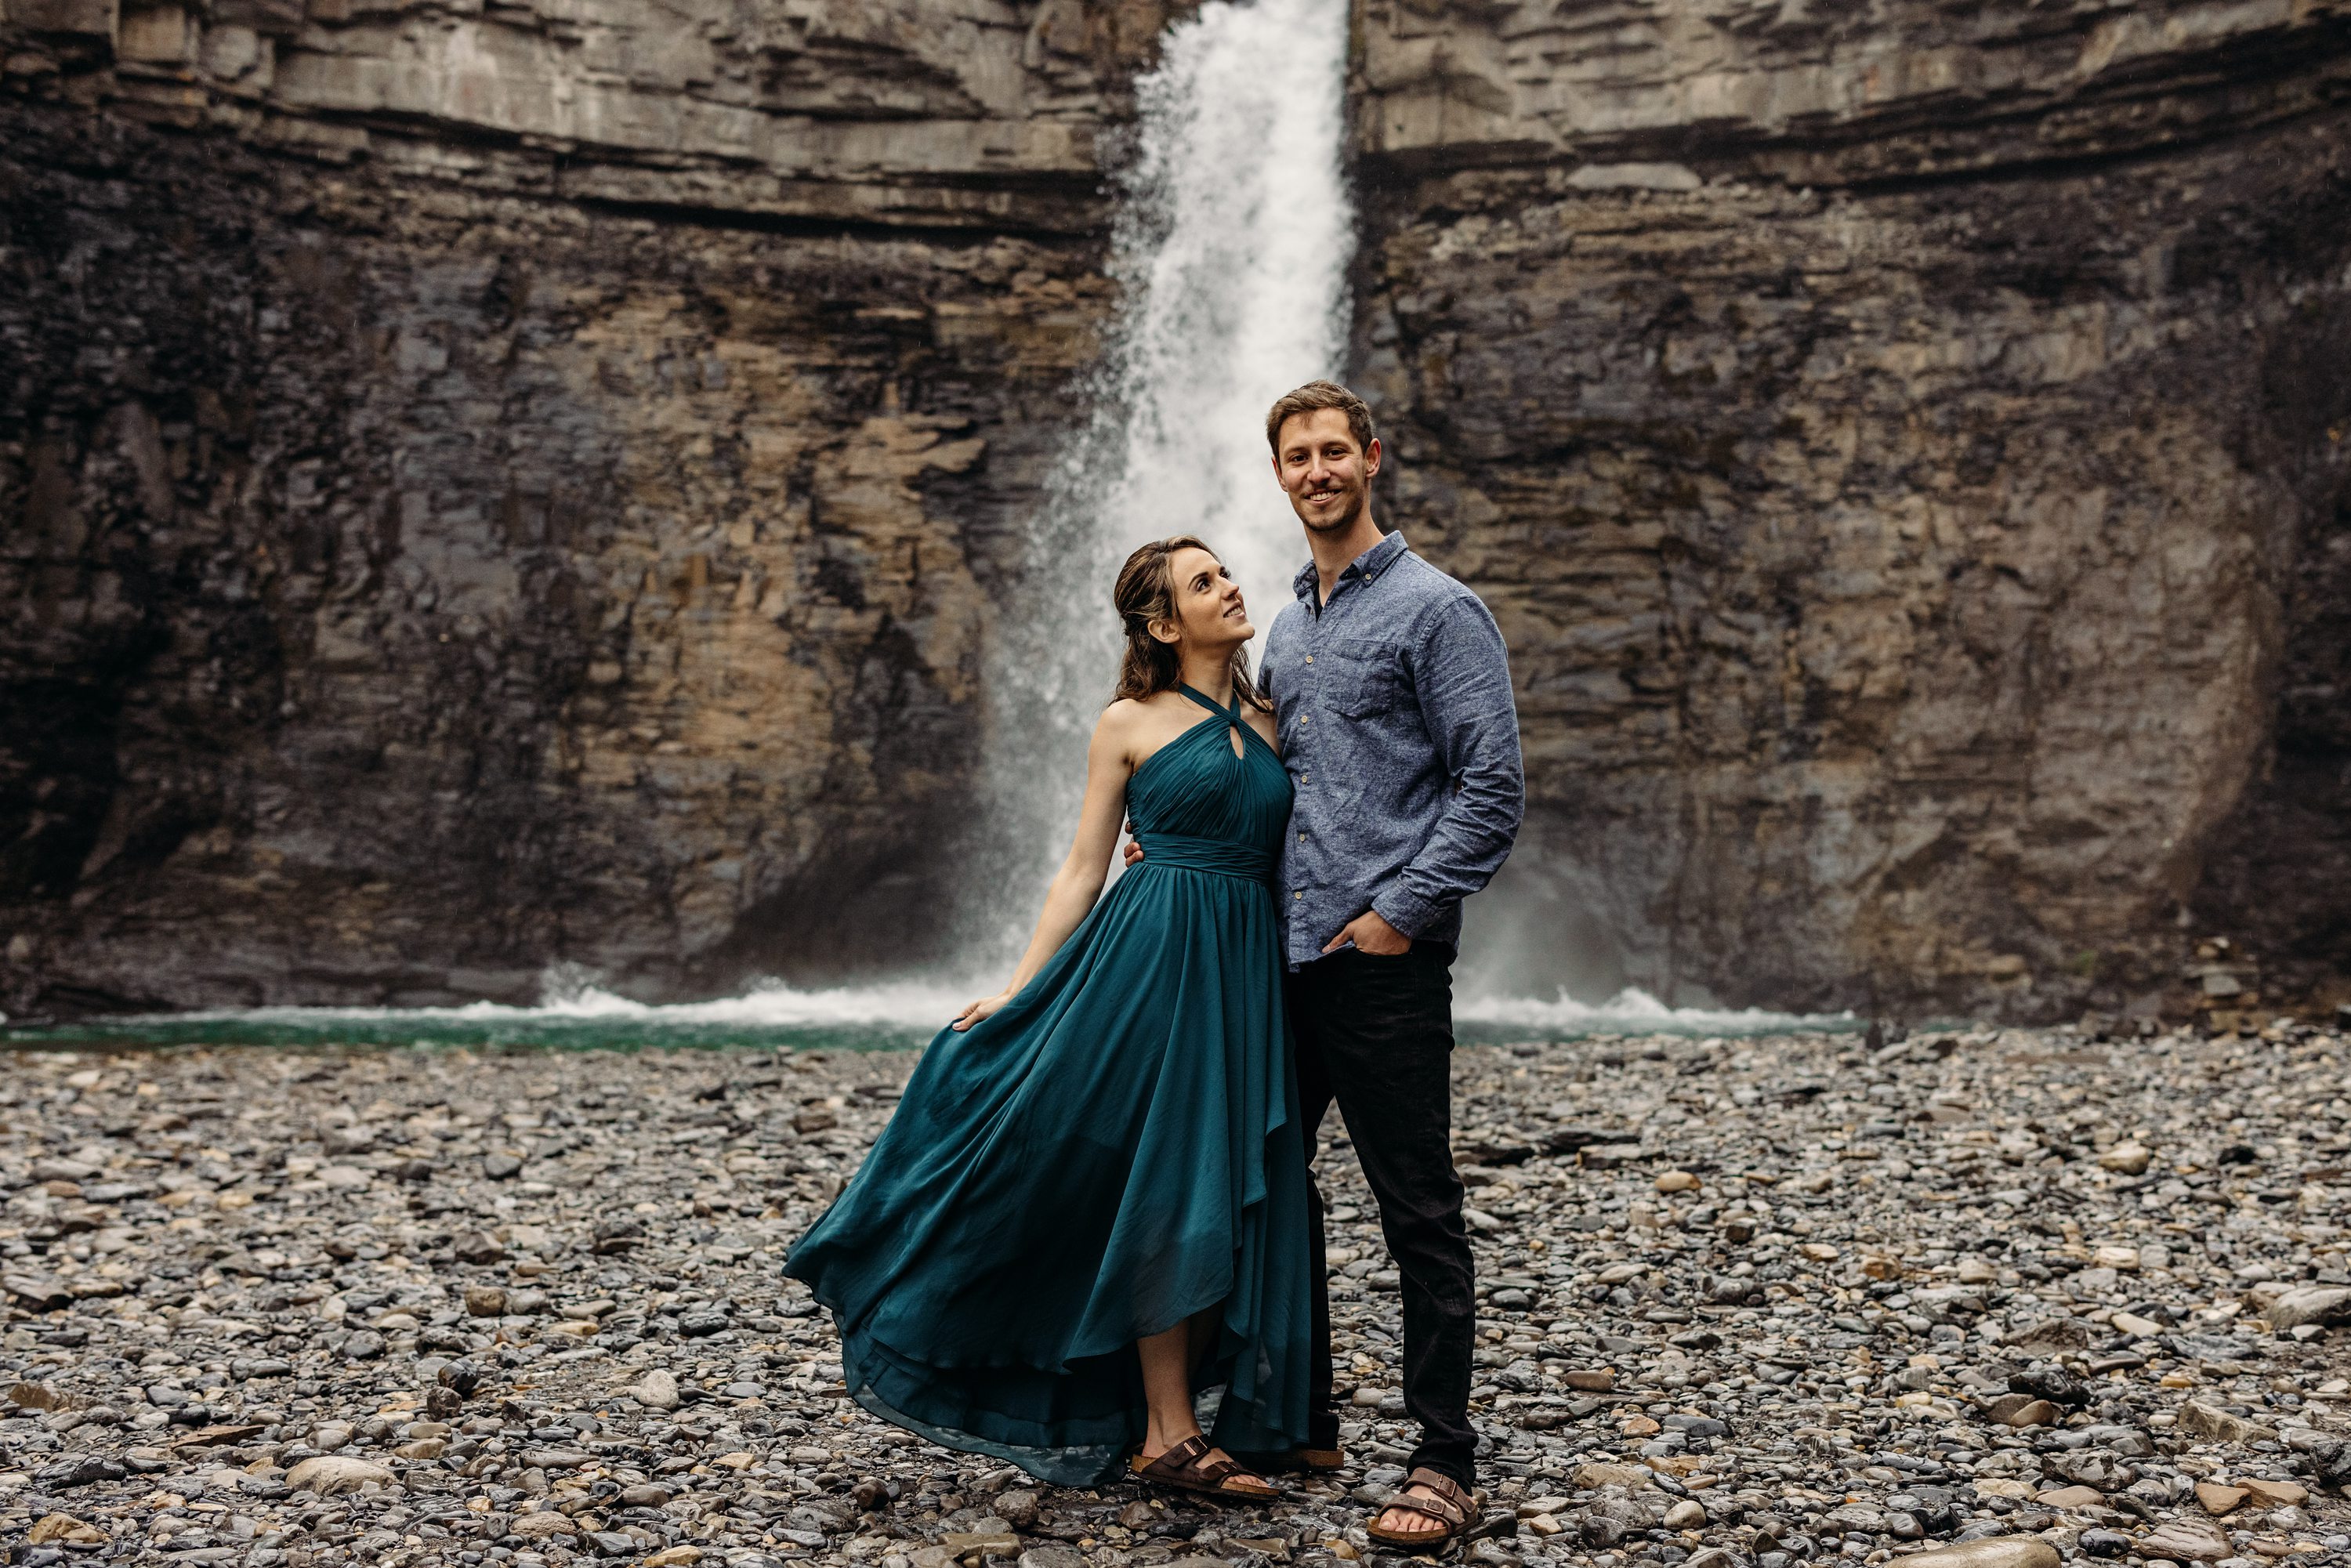  couple waterfall photos, couple photography